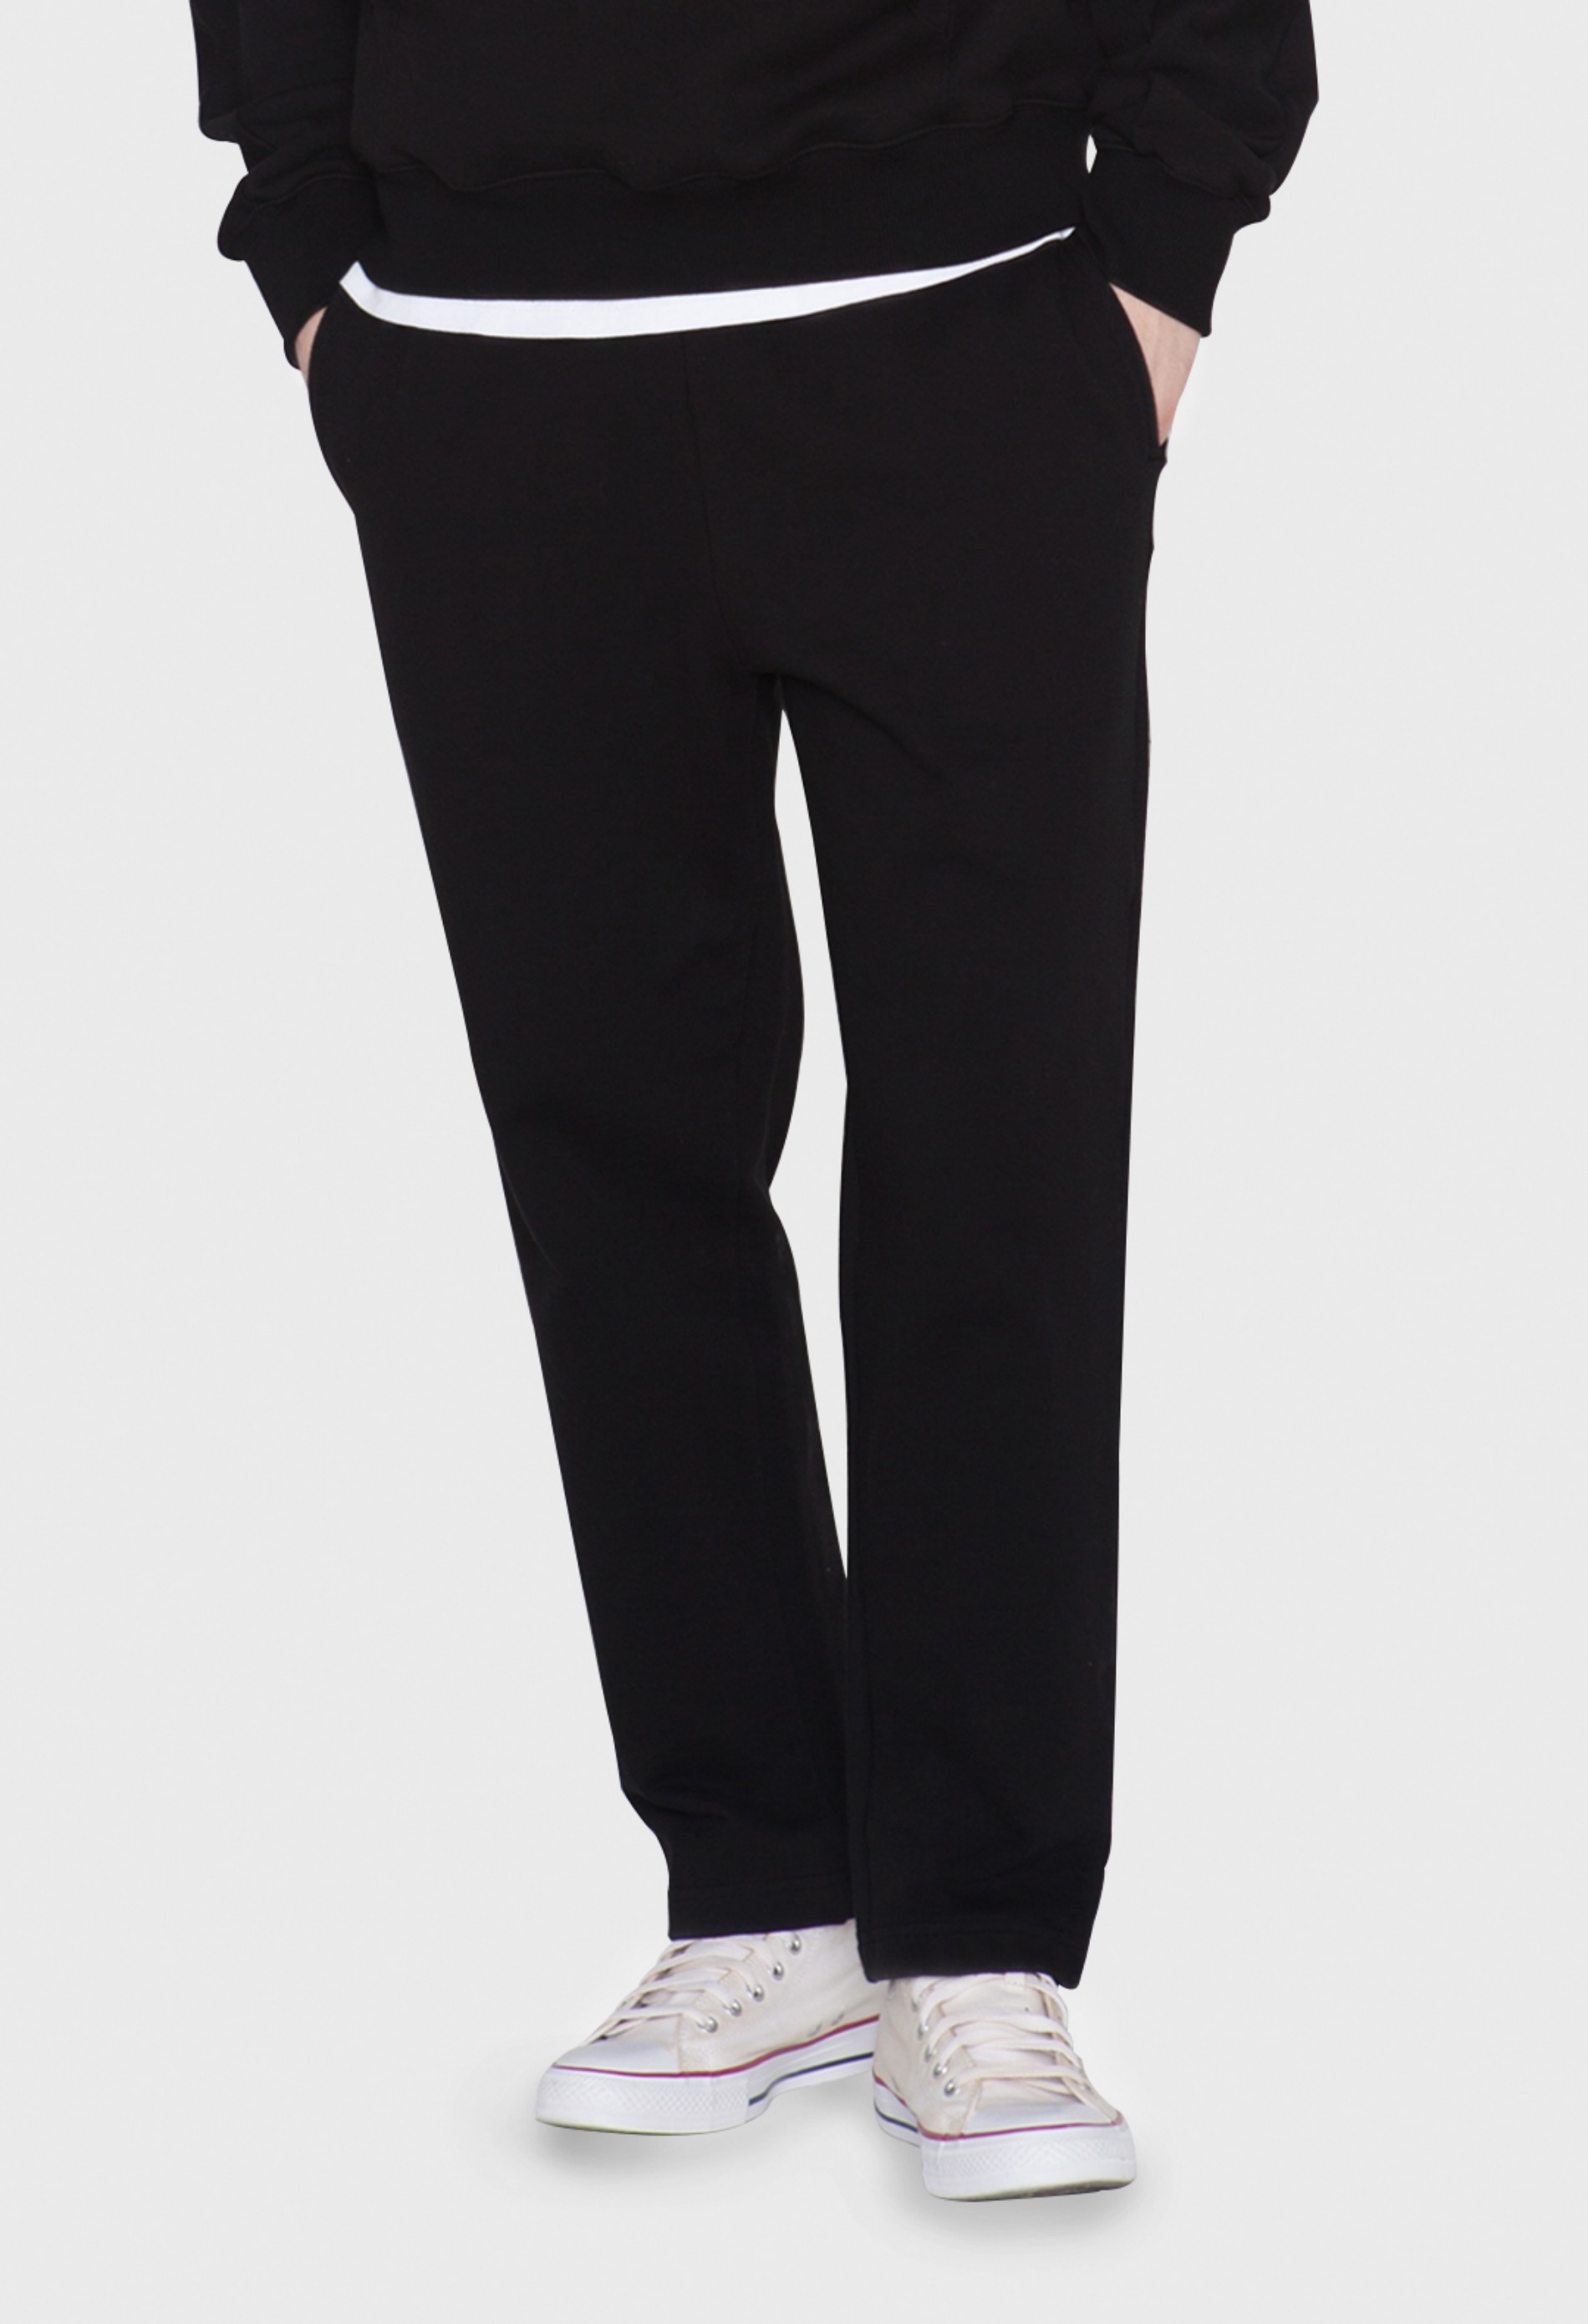 keek [Unisex] Velcro Training Pants - Black 스트릿패션 유니섹스브랜드 커플시밀러룩 남자쇼핑몰 여성의류쇼핑몰 후드티 힙색